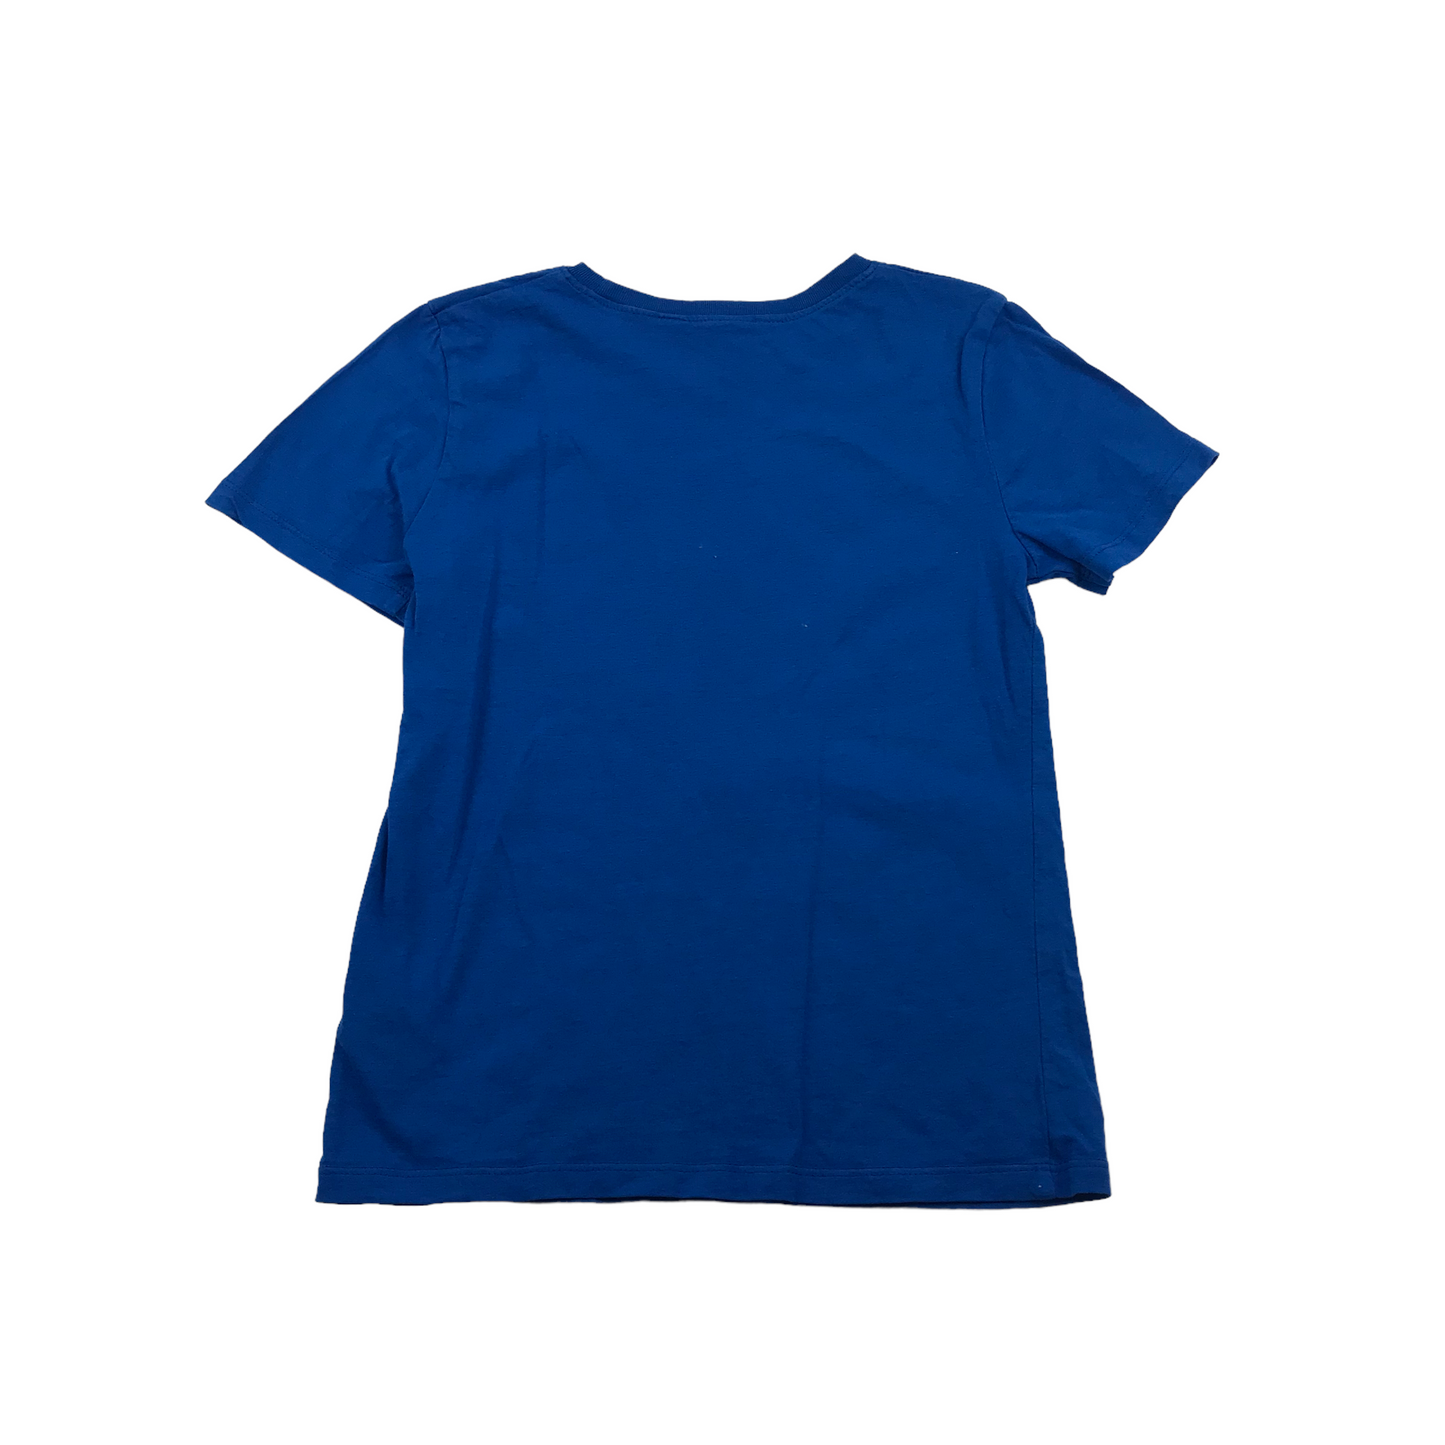 H&M Royal Blue Superman T-shirt Age 7